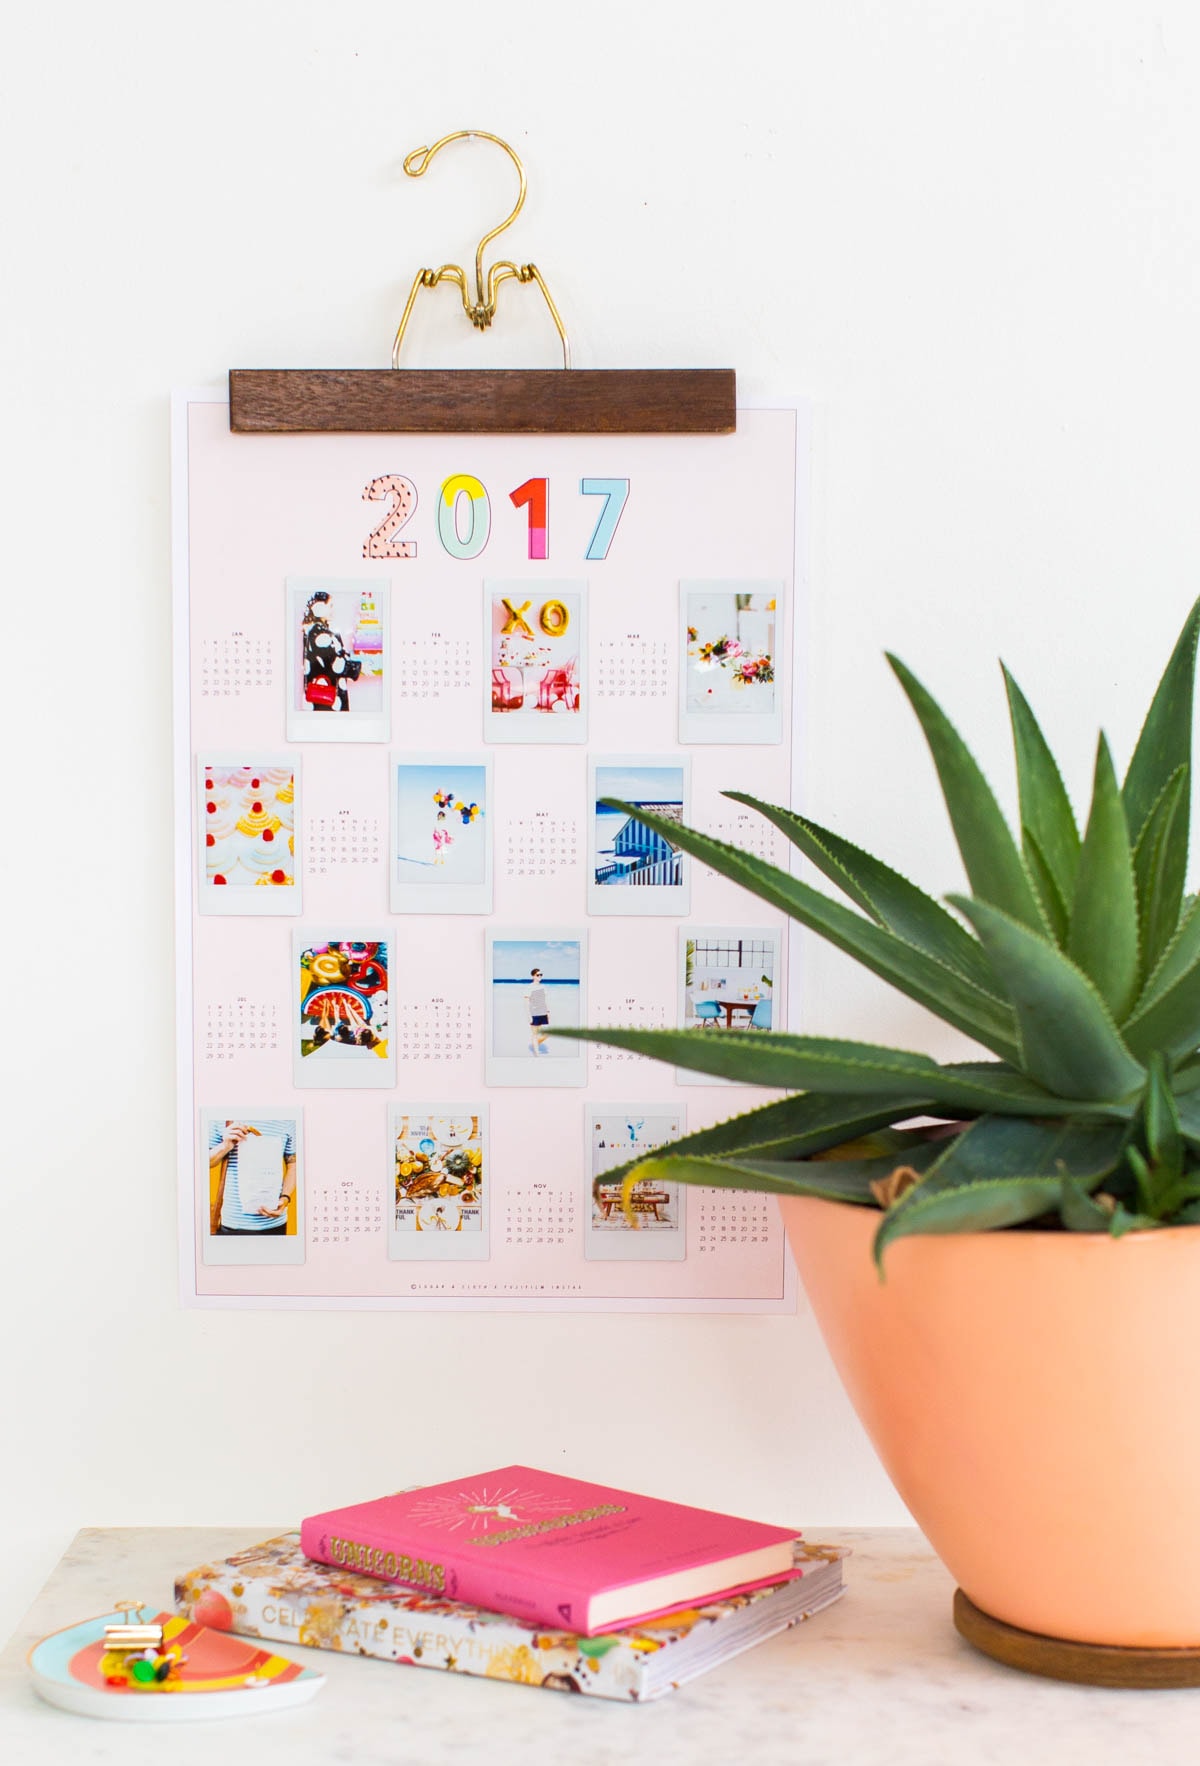 Free DIY Printable Photo Wall Calendar by lifestyle blogger Ashley Rose of Sugar & Cloth